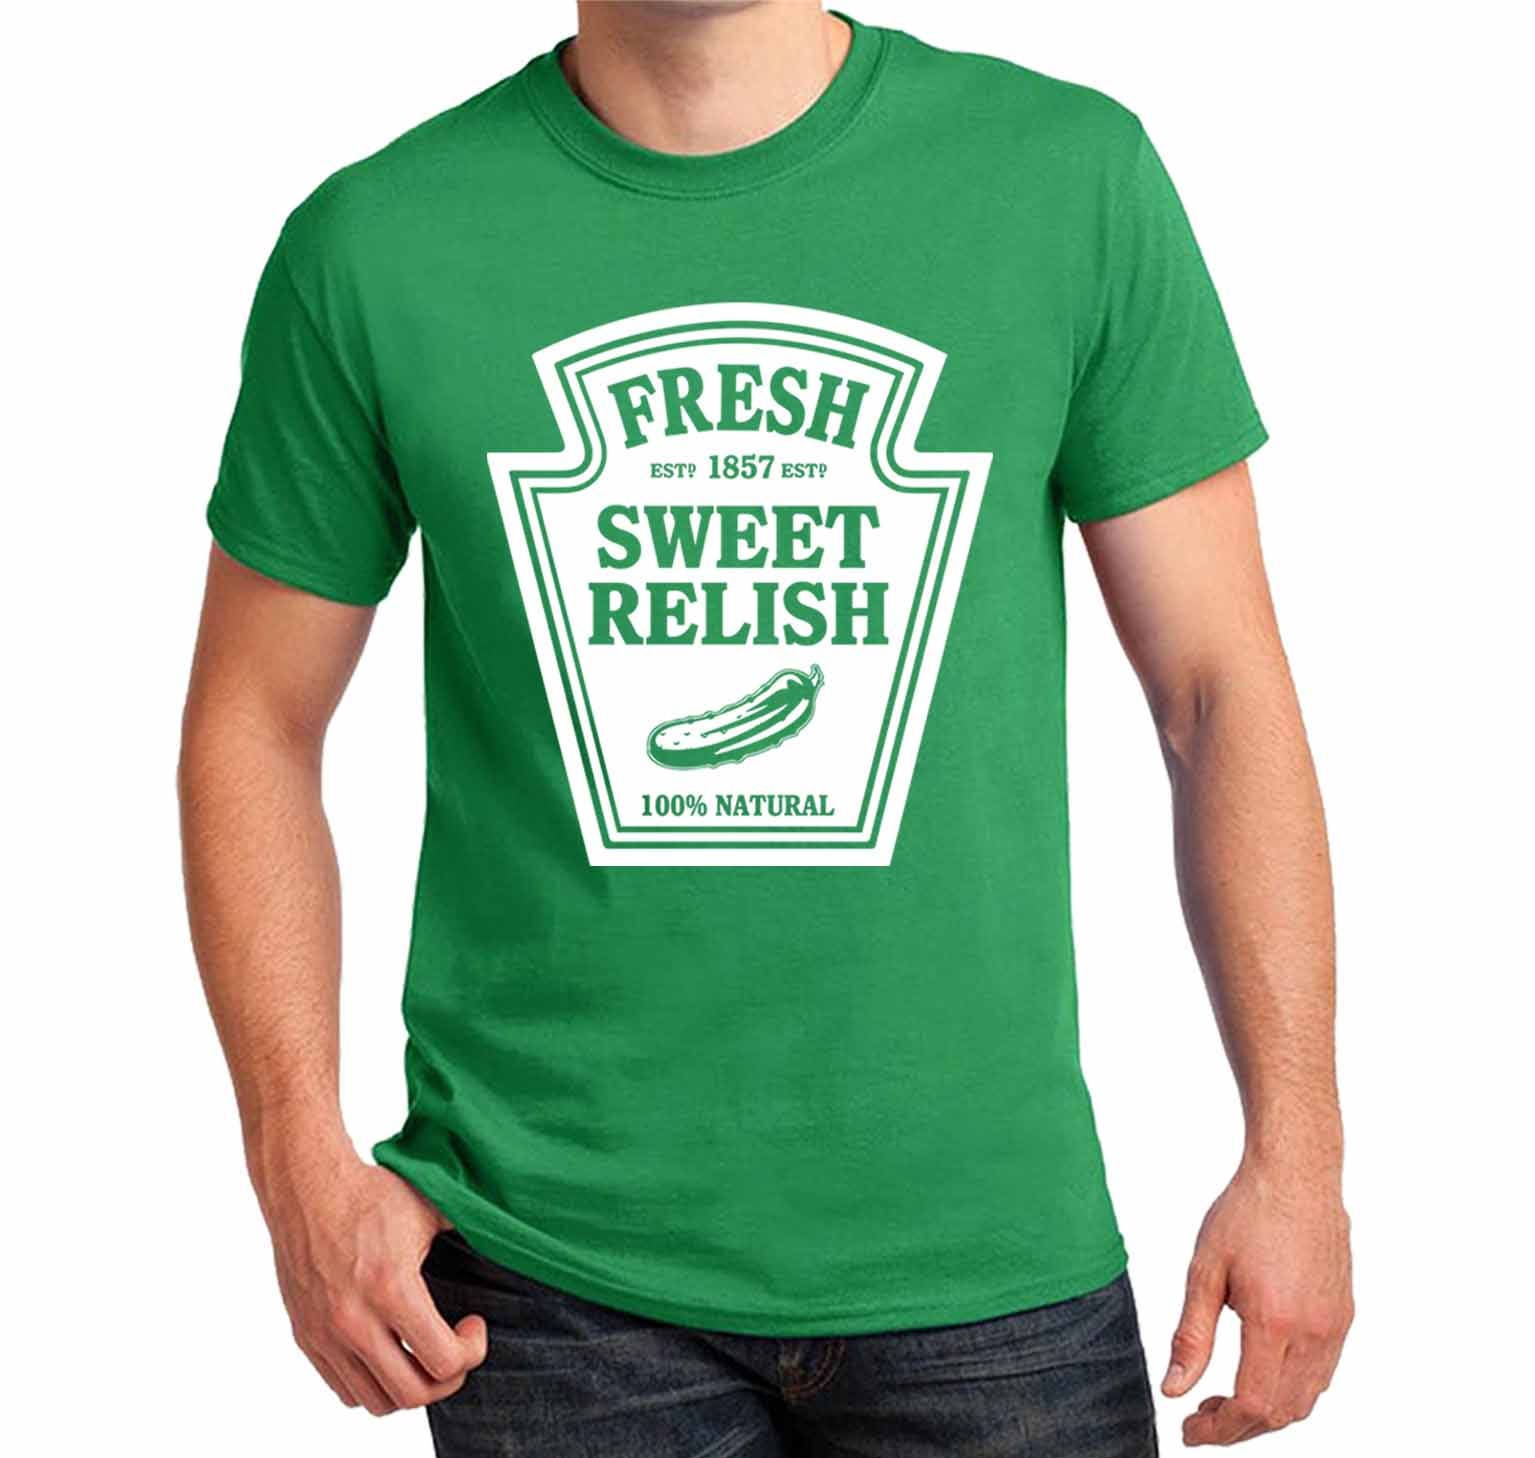 Sweet Relish T-shirt Halloween costume cosplay Shirts Mens | Etsy